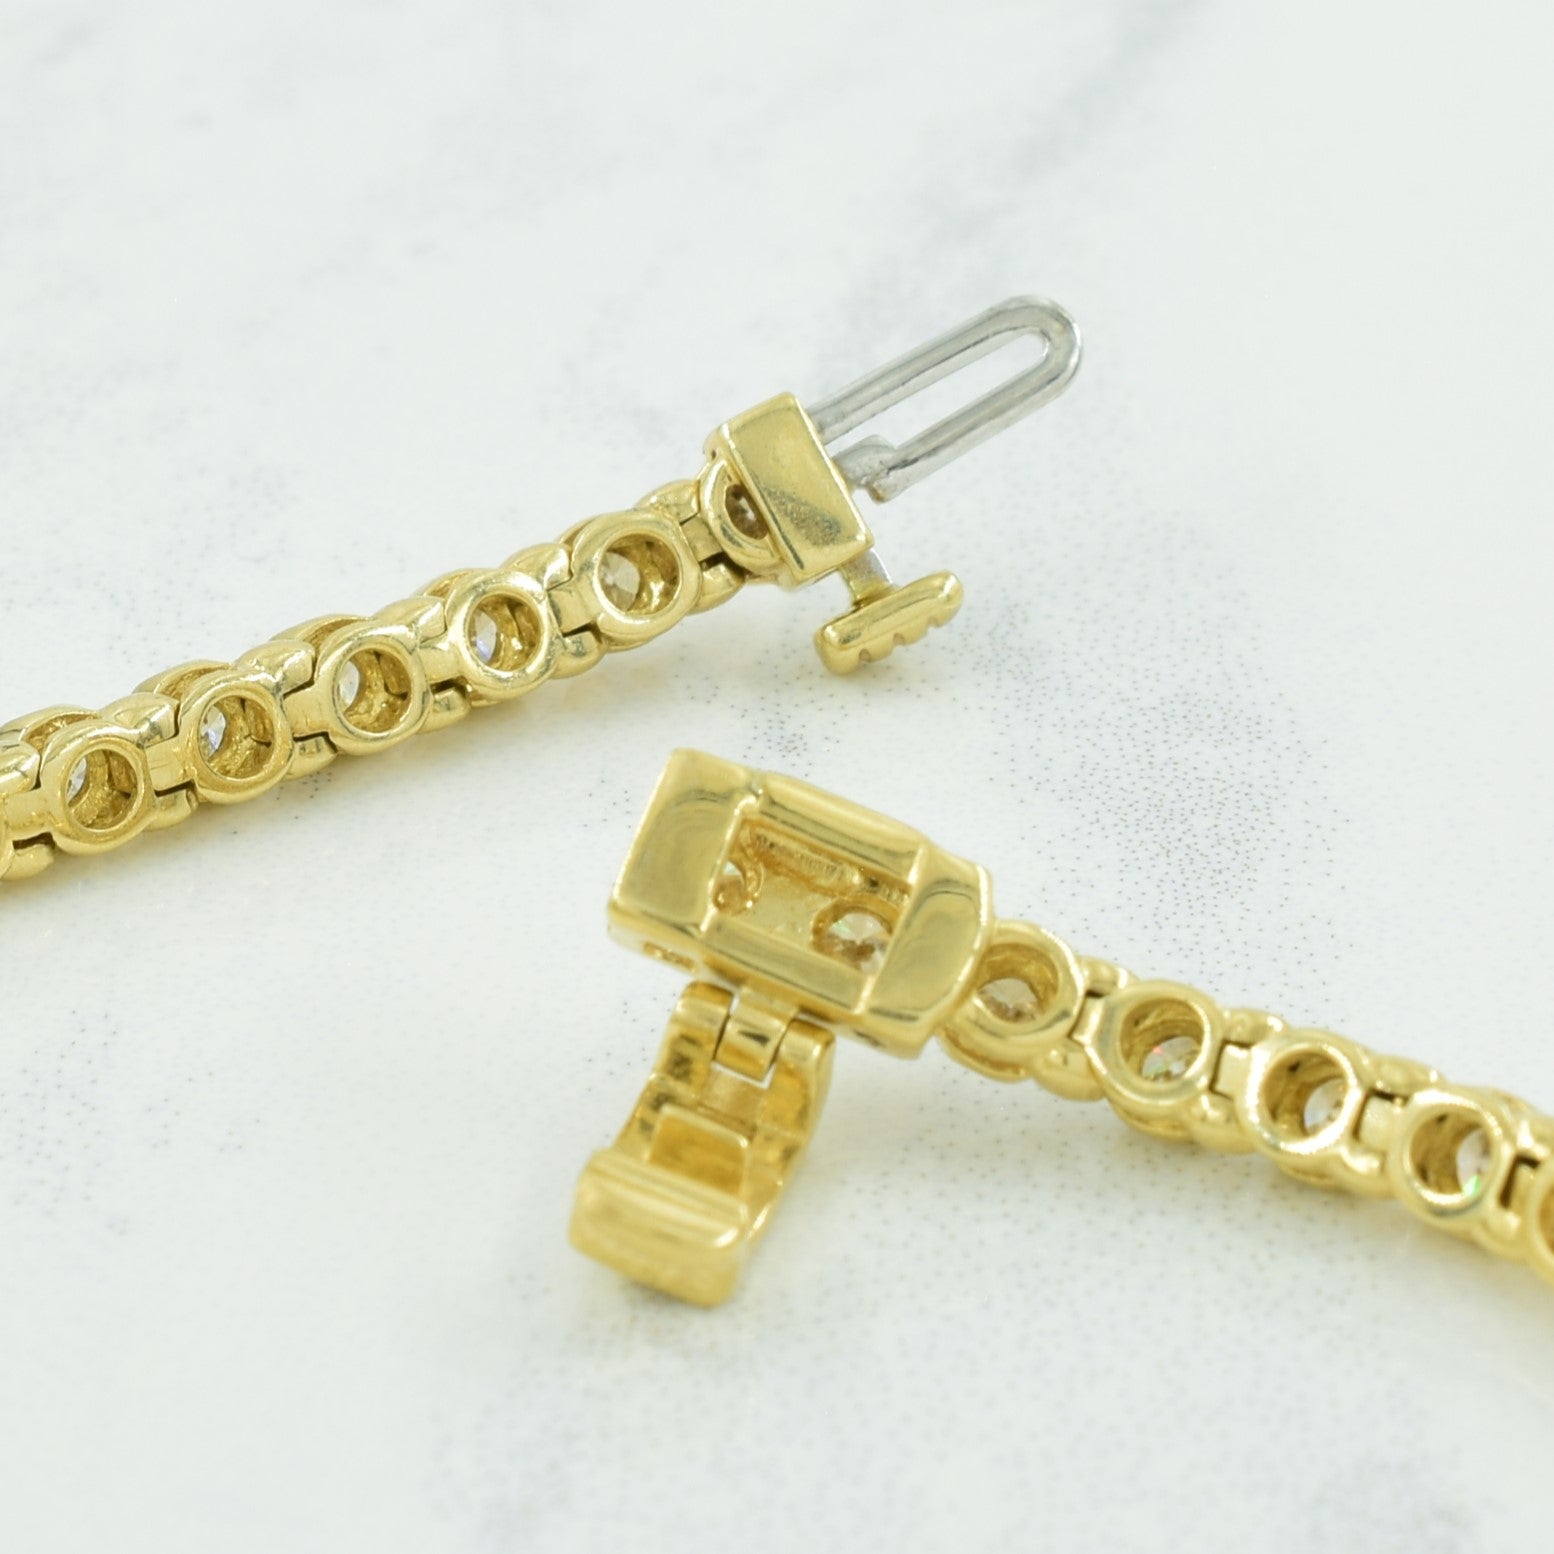 10k Yellow Gold Diamond Tennis Bracelet | 2.08ctw | 7